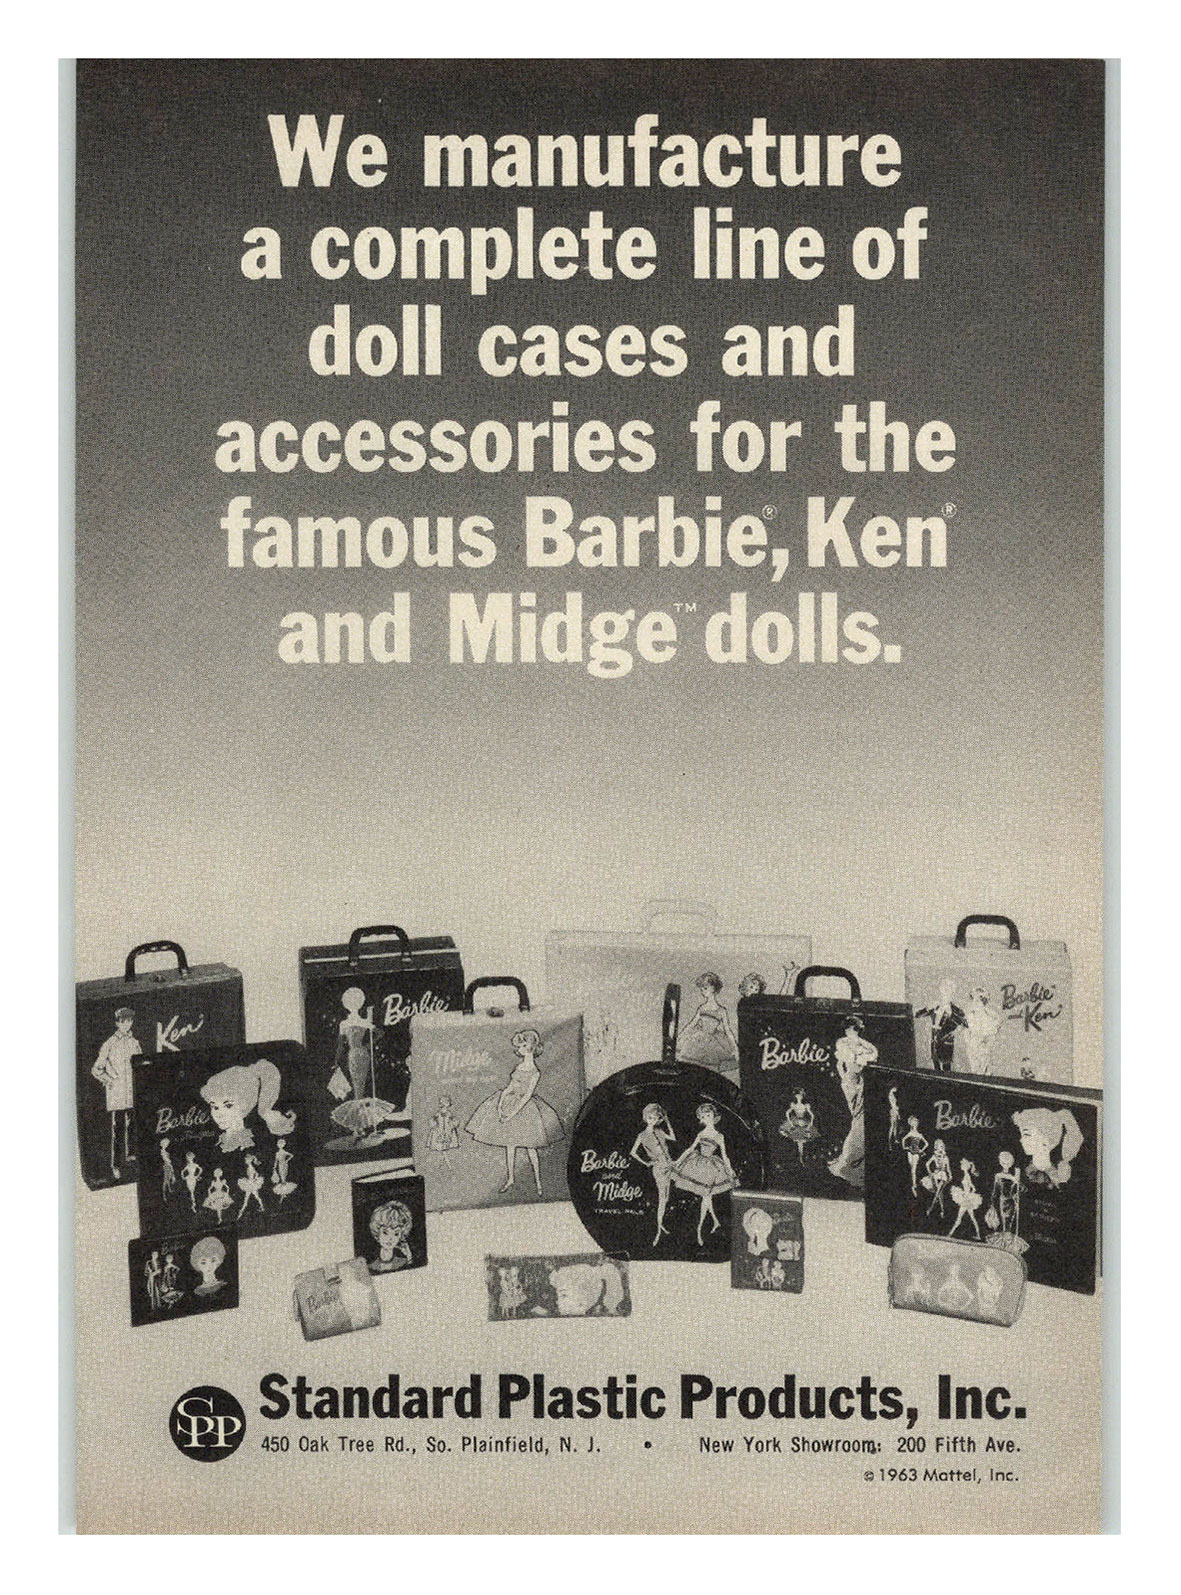 1963 Standard Plastic Products advertisement